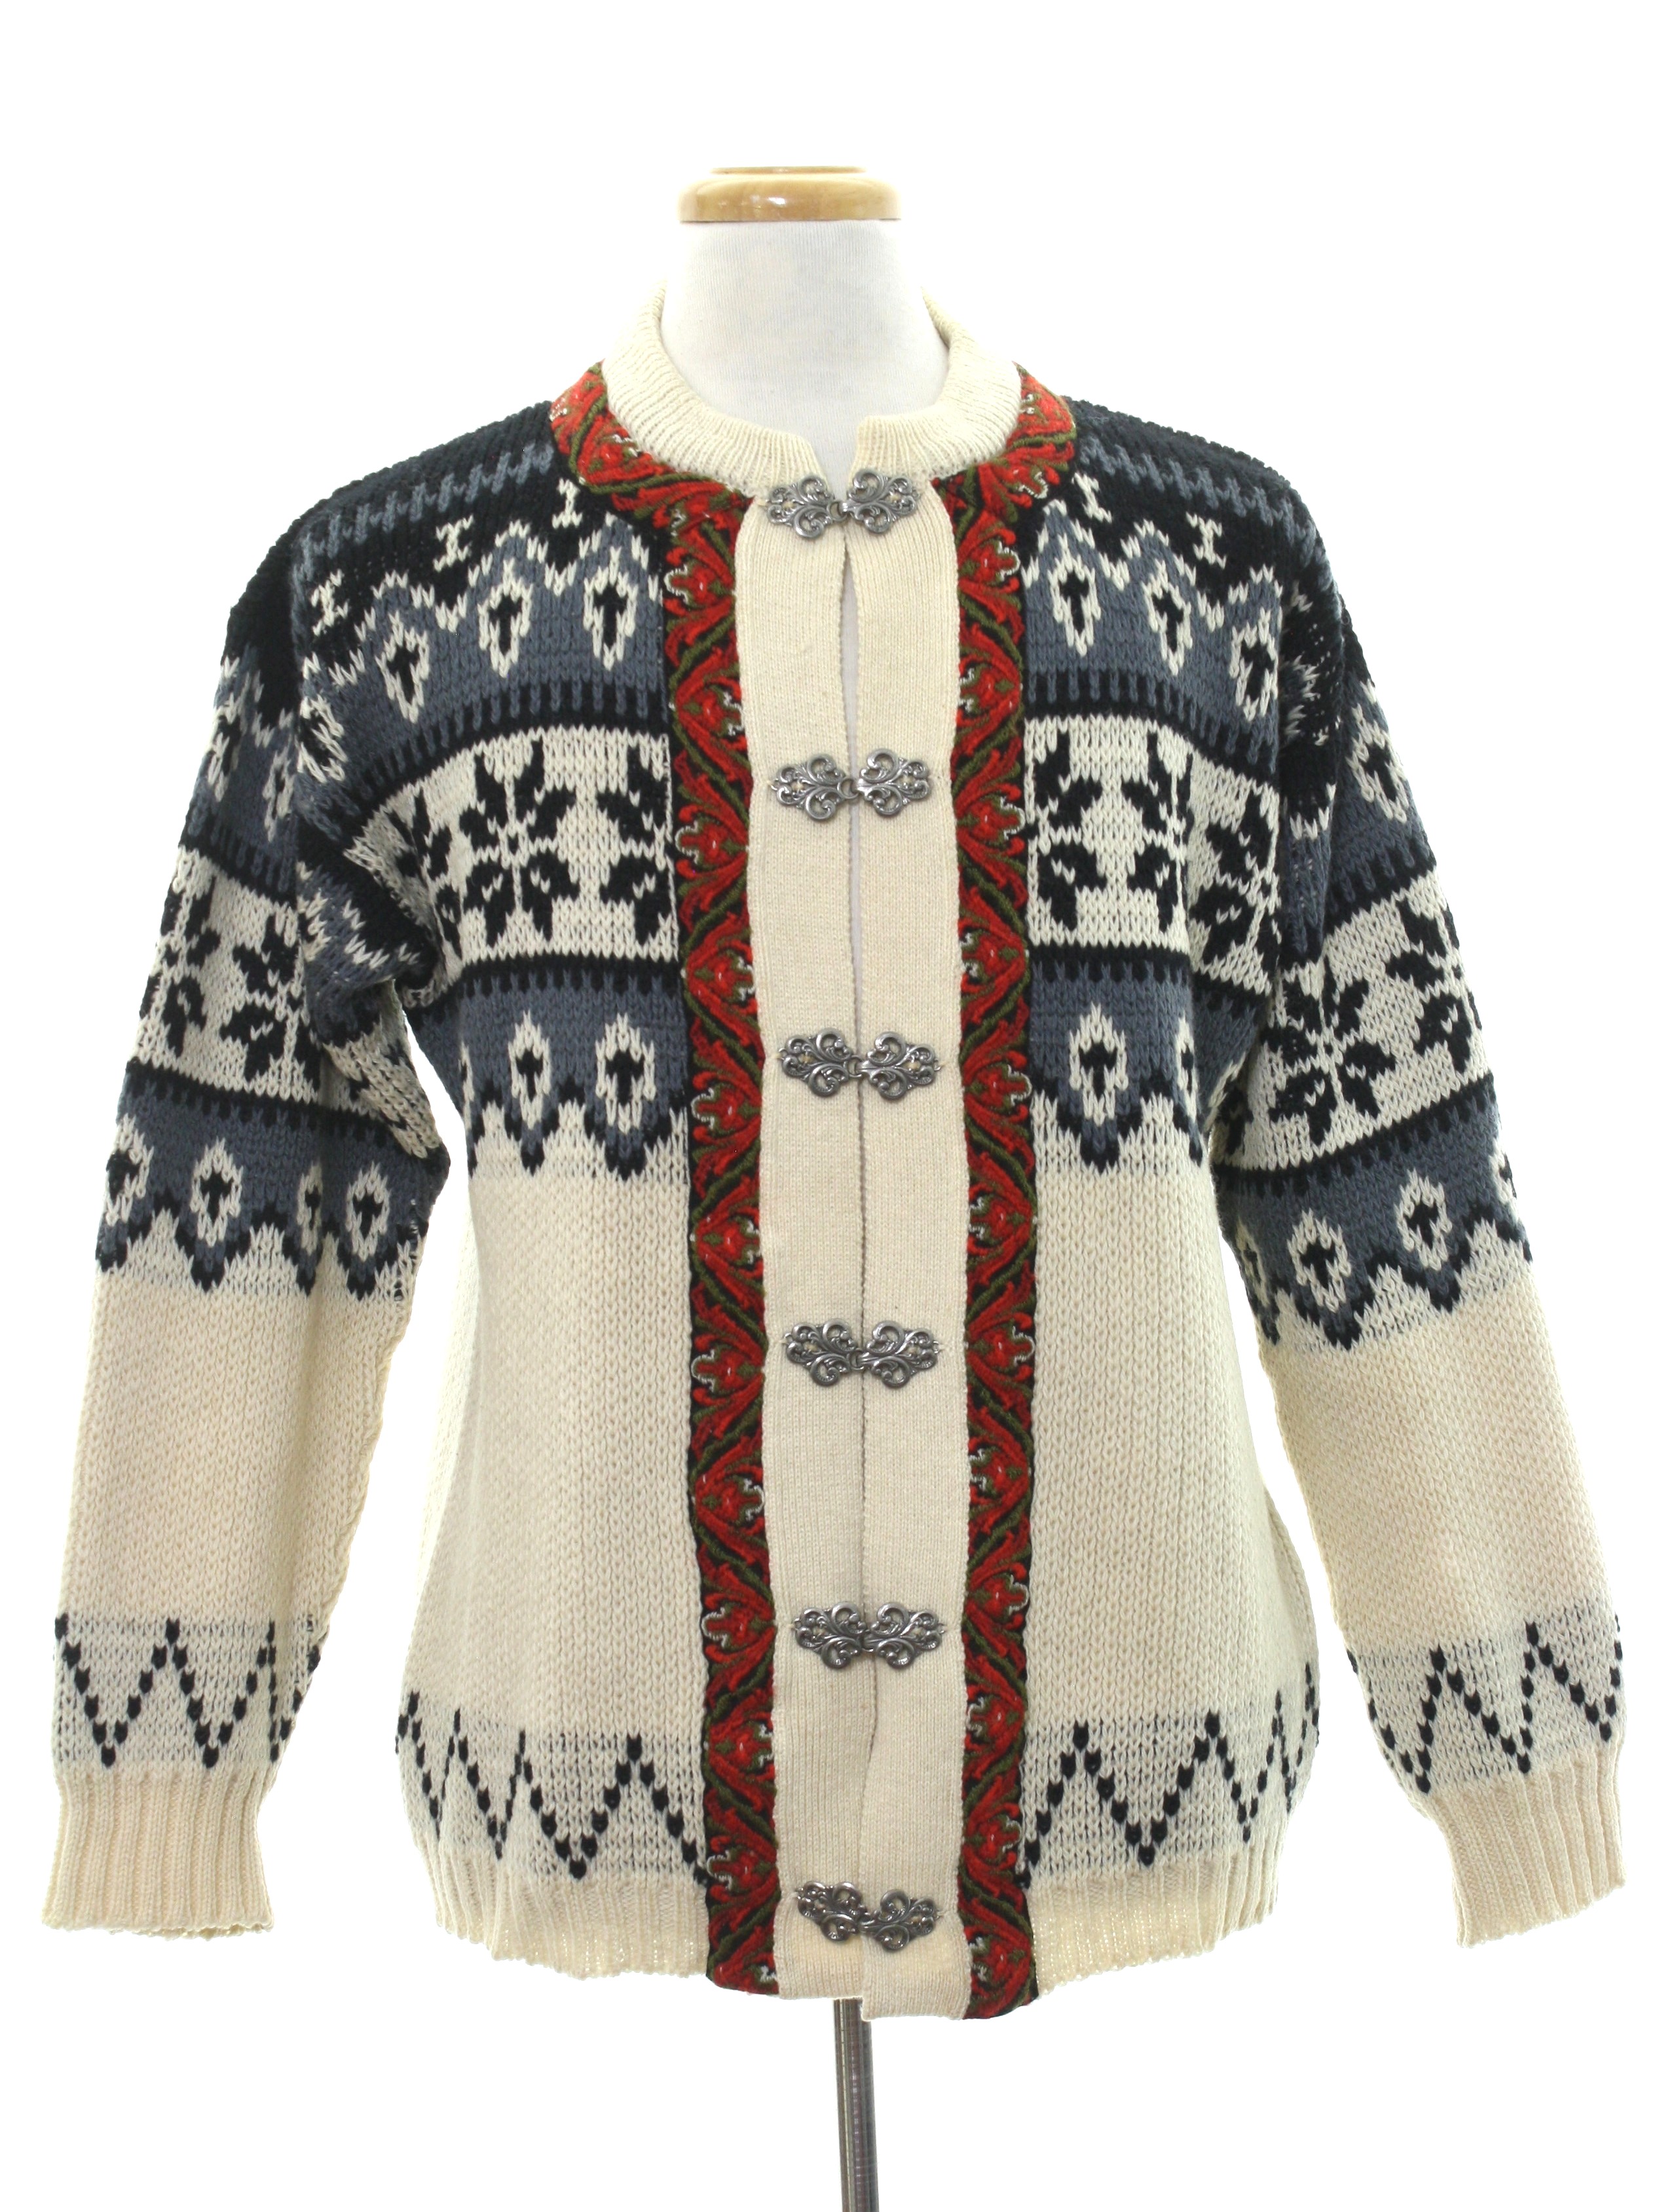 Retro Eighties Sweater: 80s -Kaare Giese- Mens winter white, black, and ...